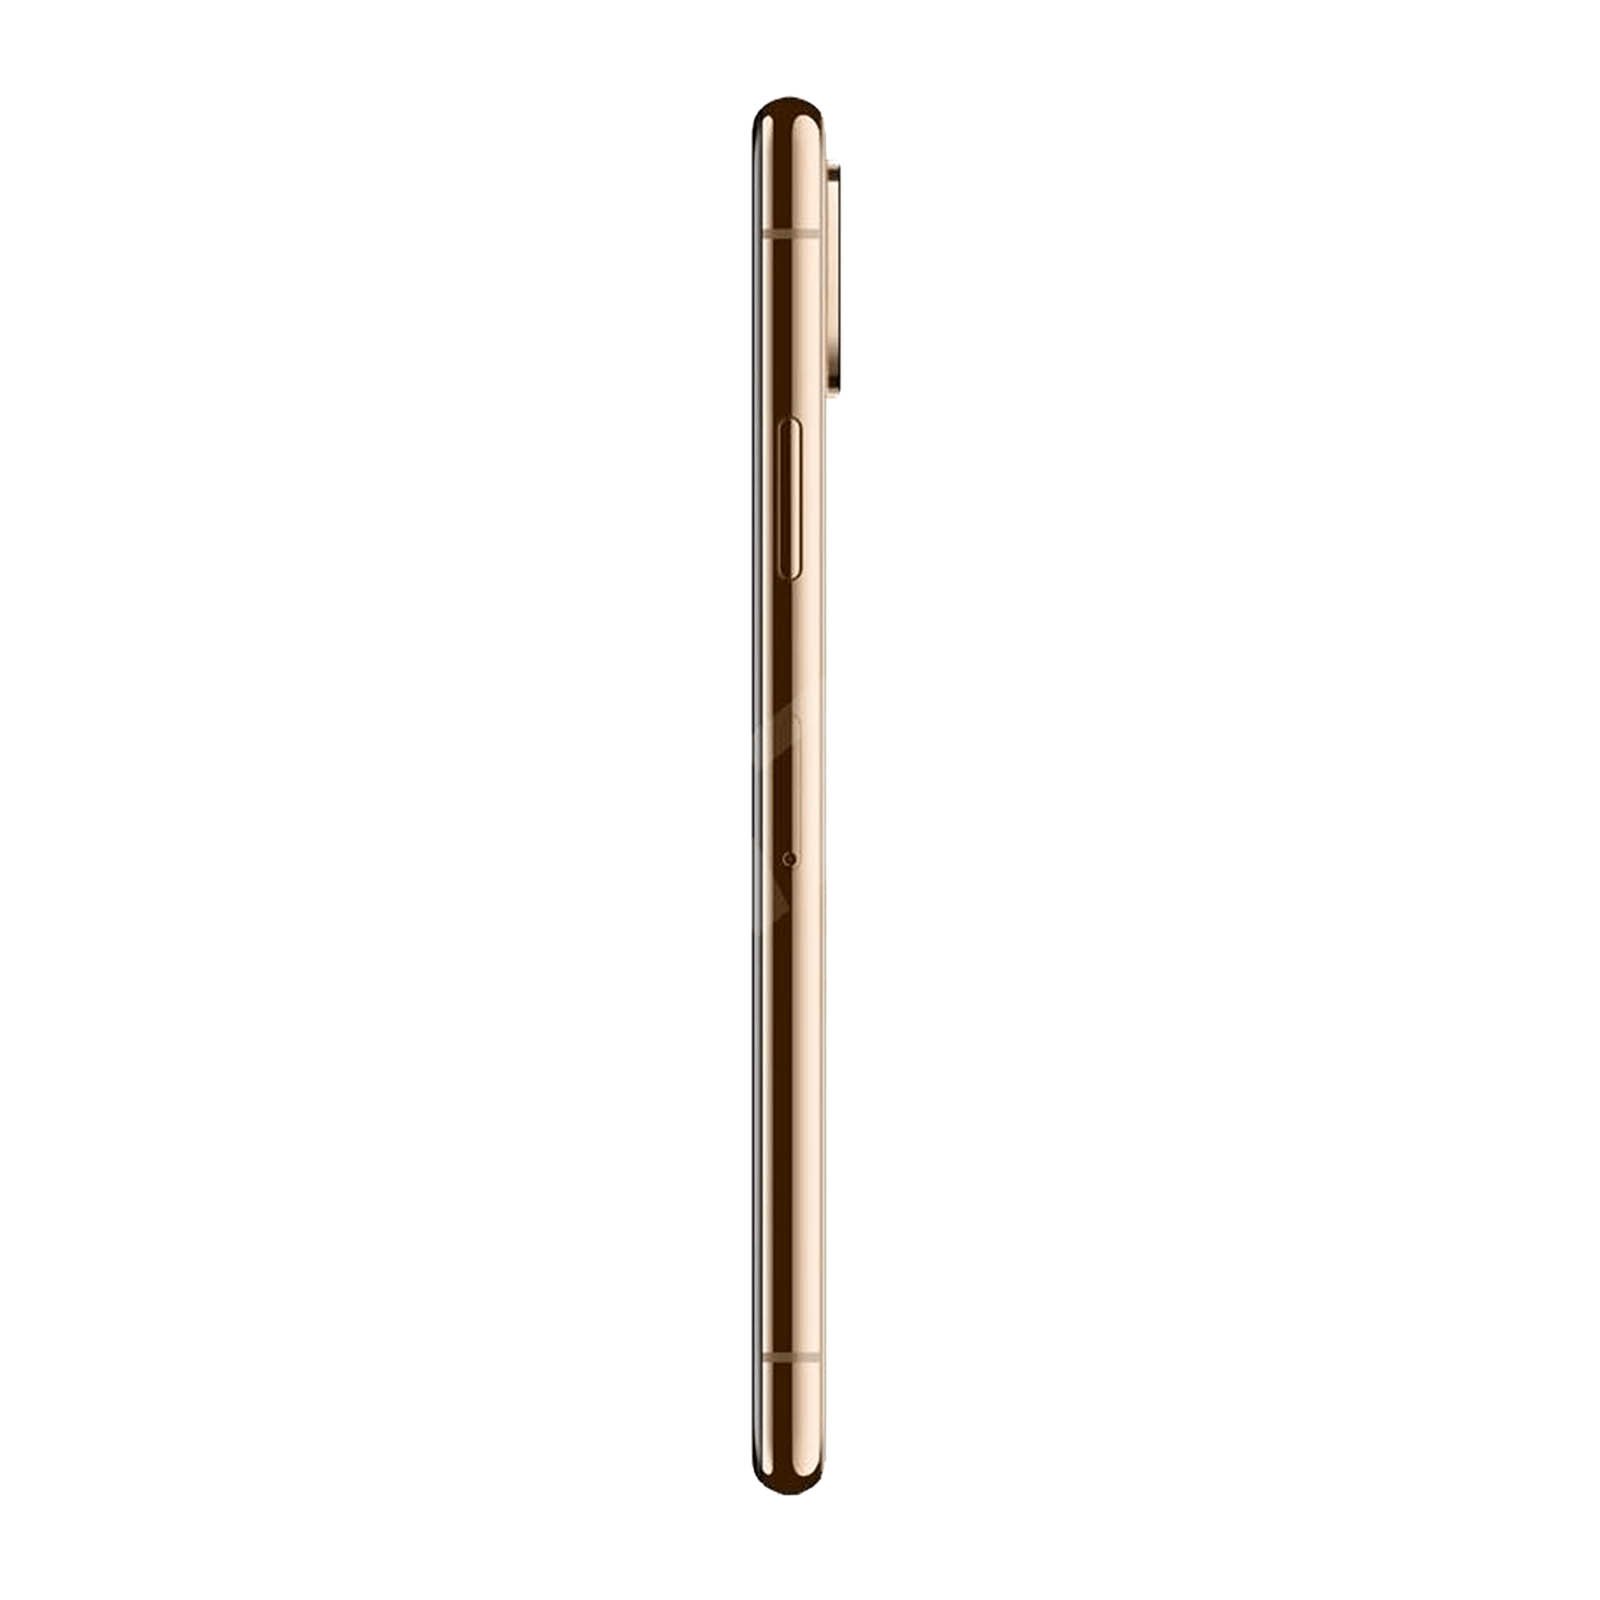 Apple iPhone XS Max 512GB Gold Good - Unlocked